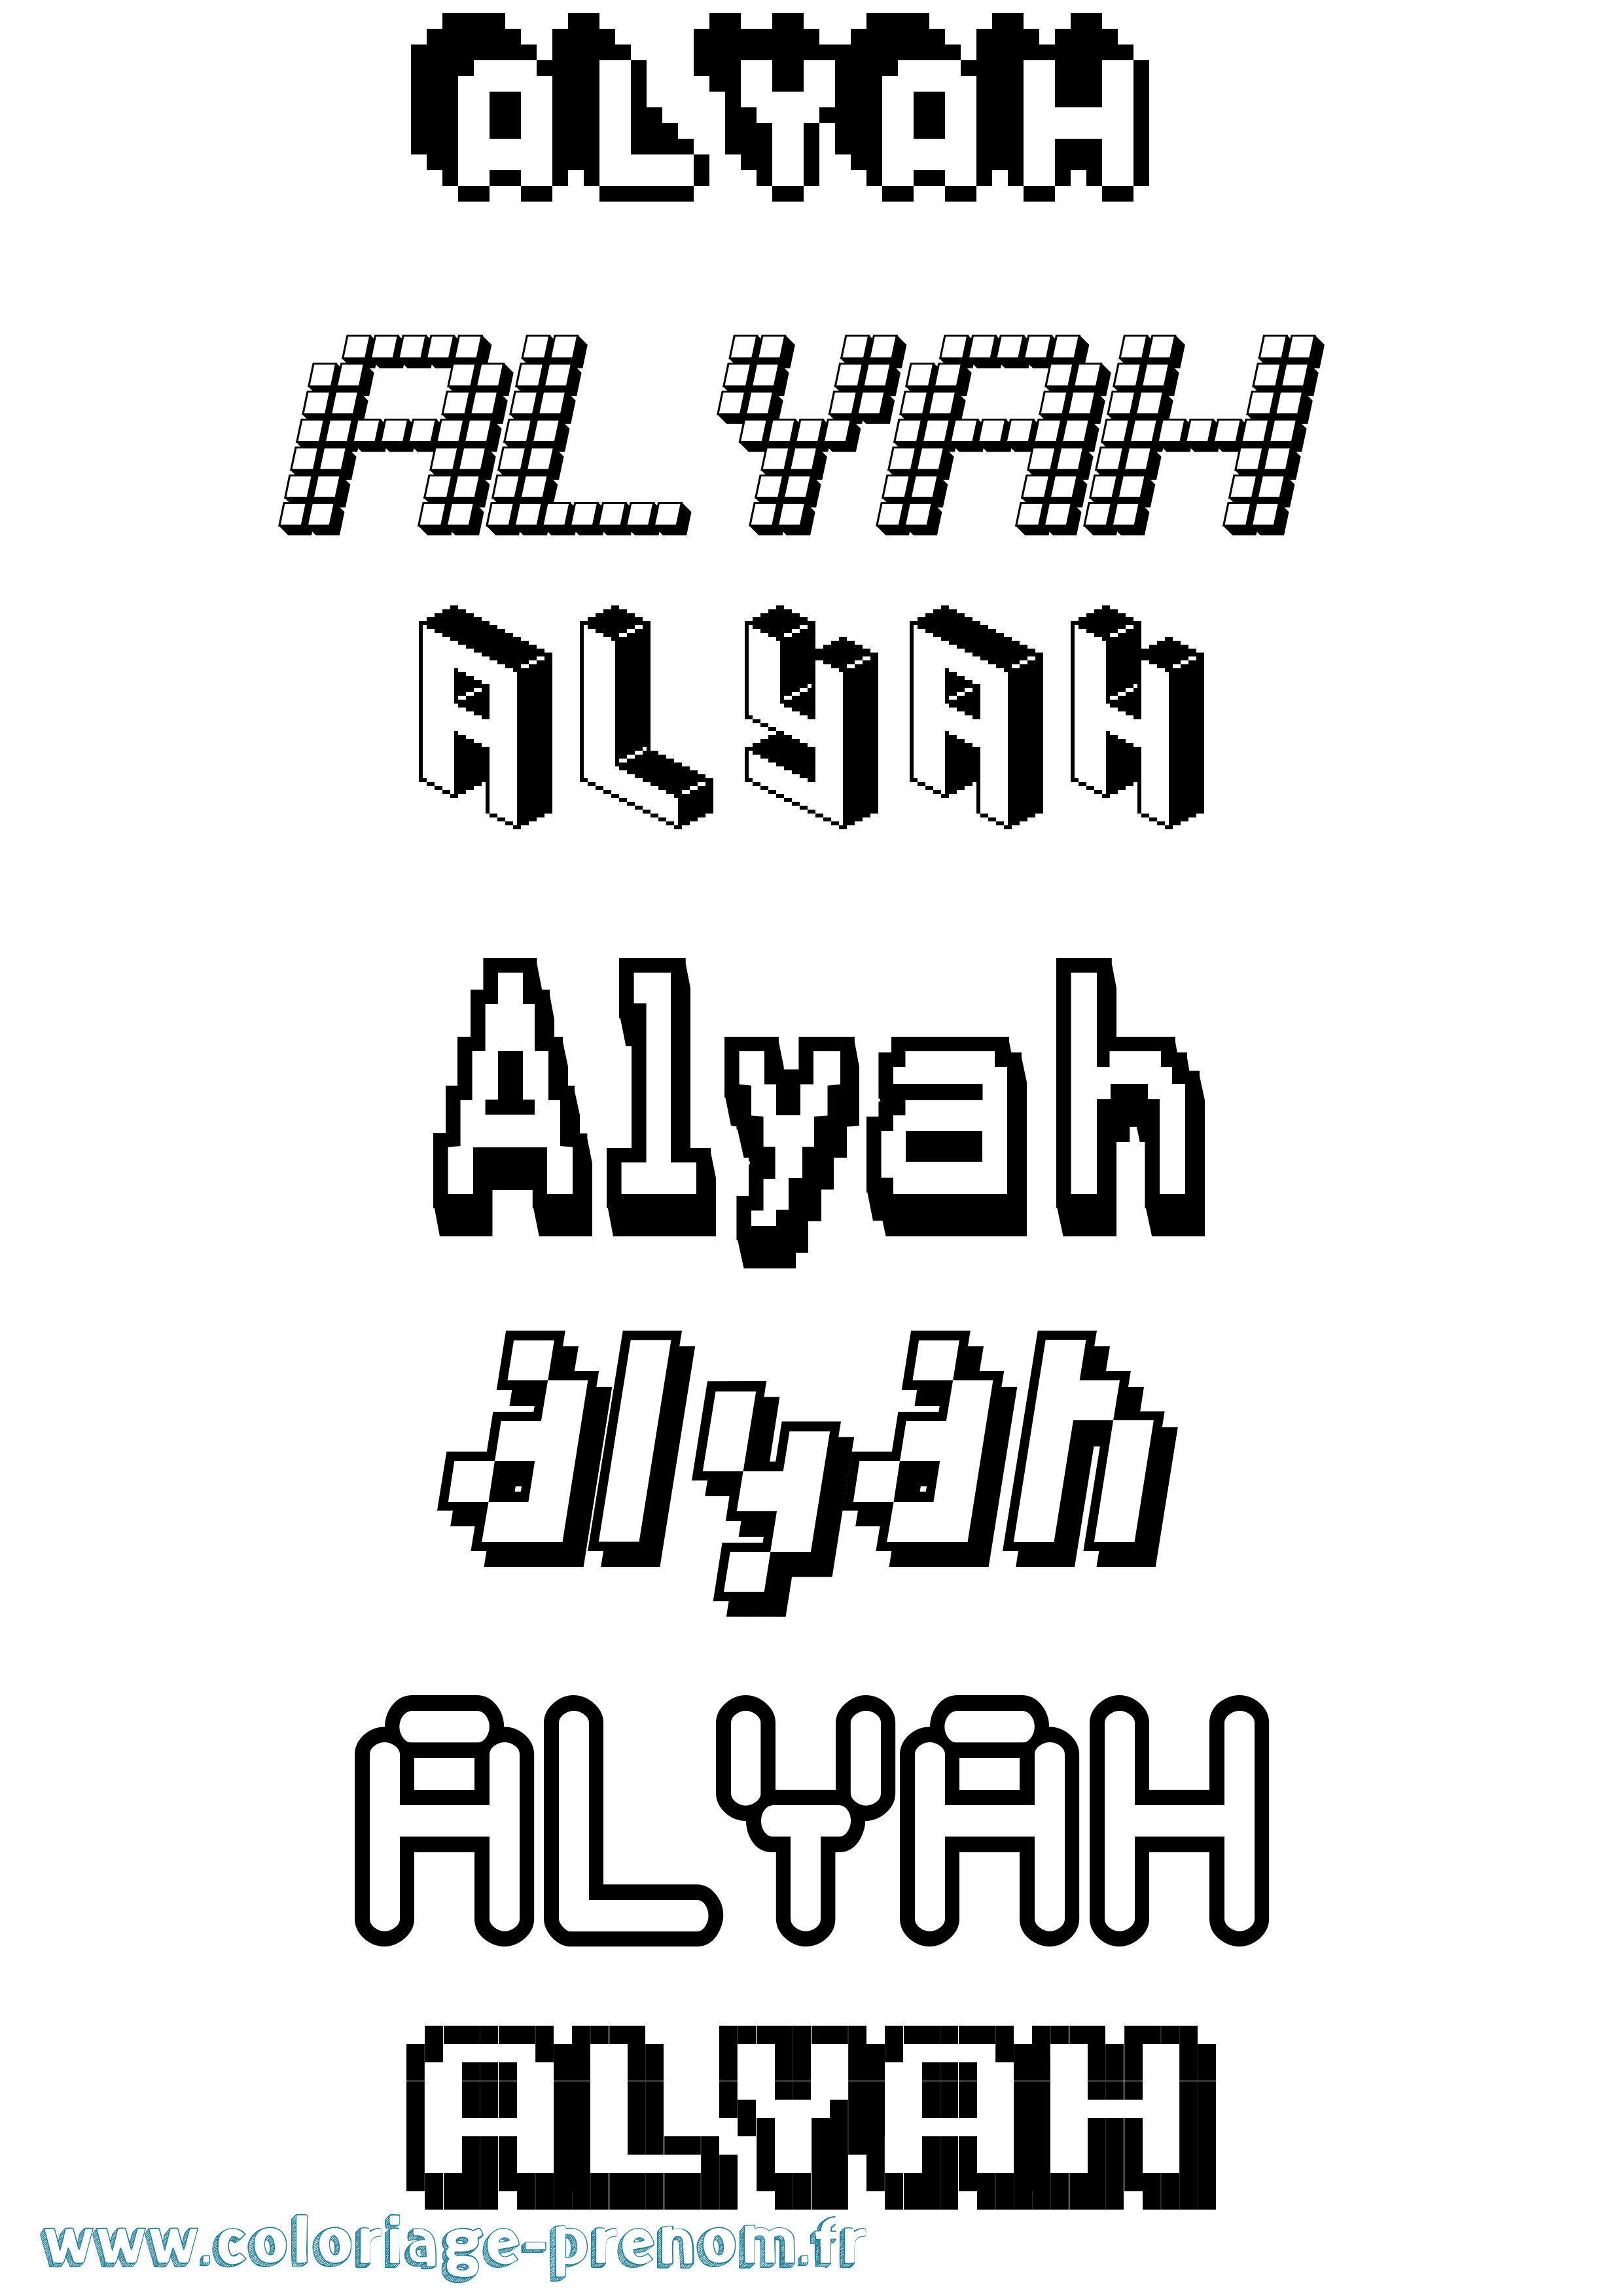 Coloriage prénom Alyah